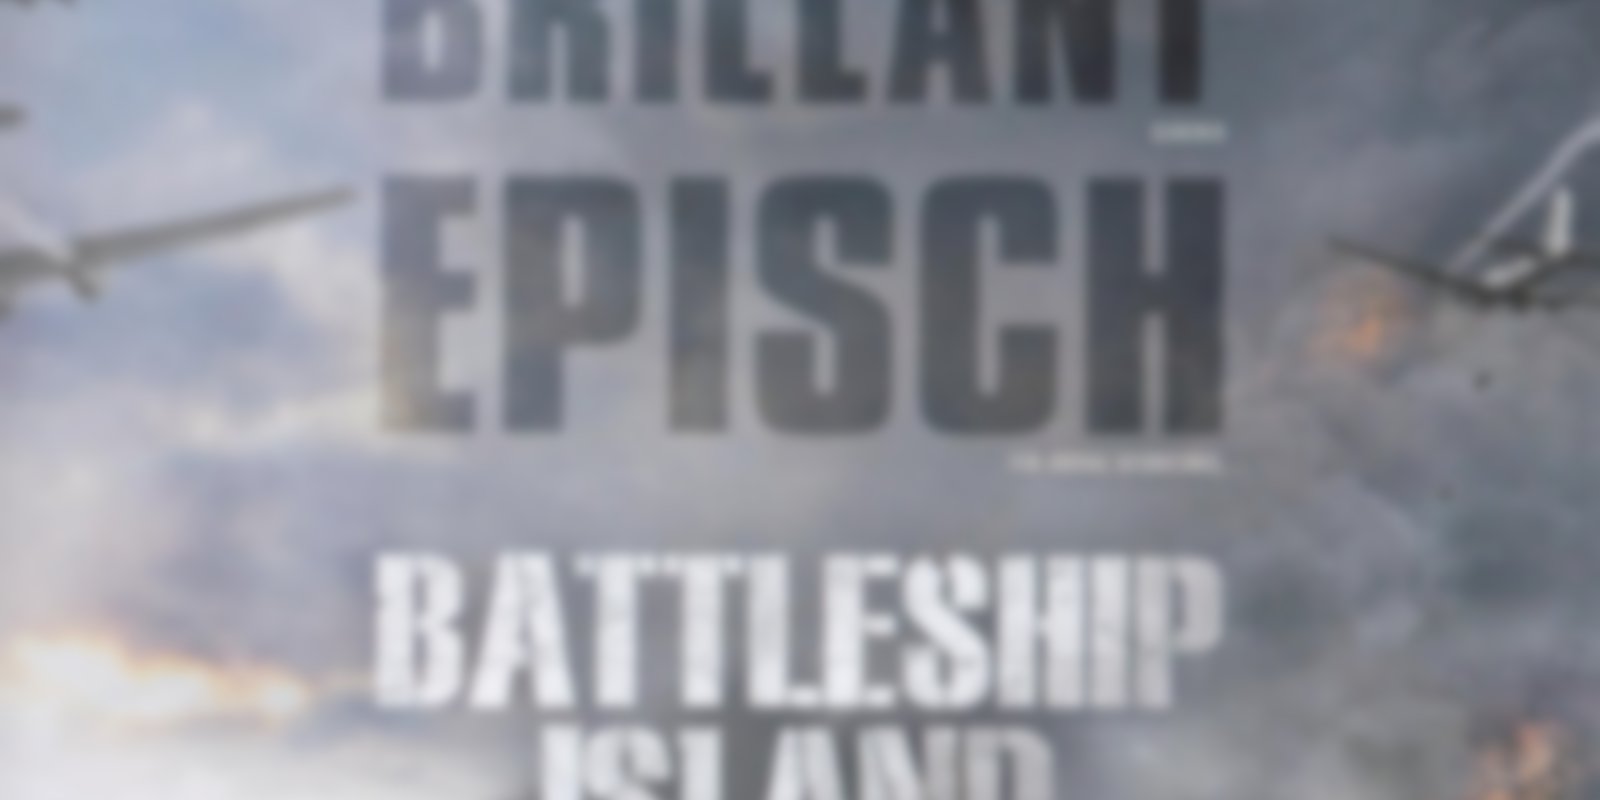 Battleship Island